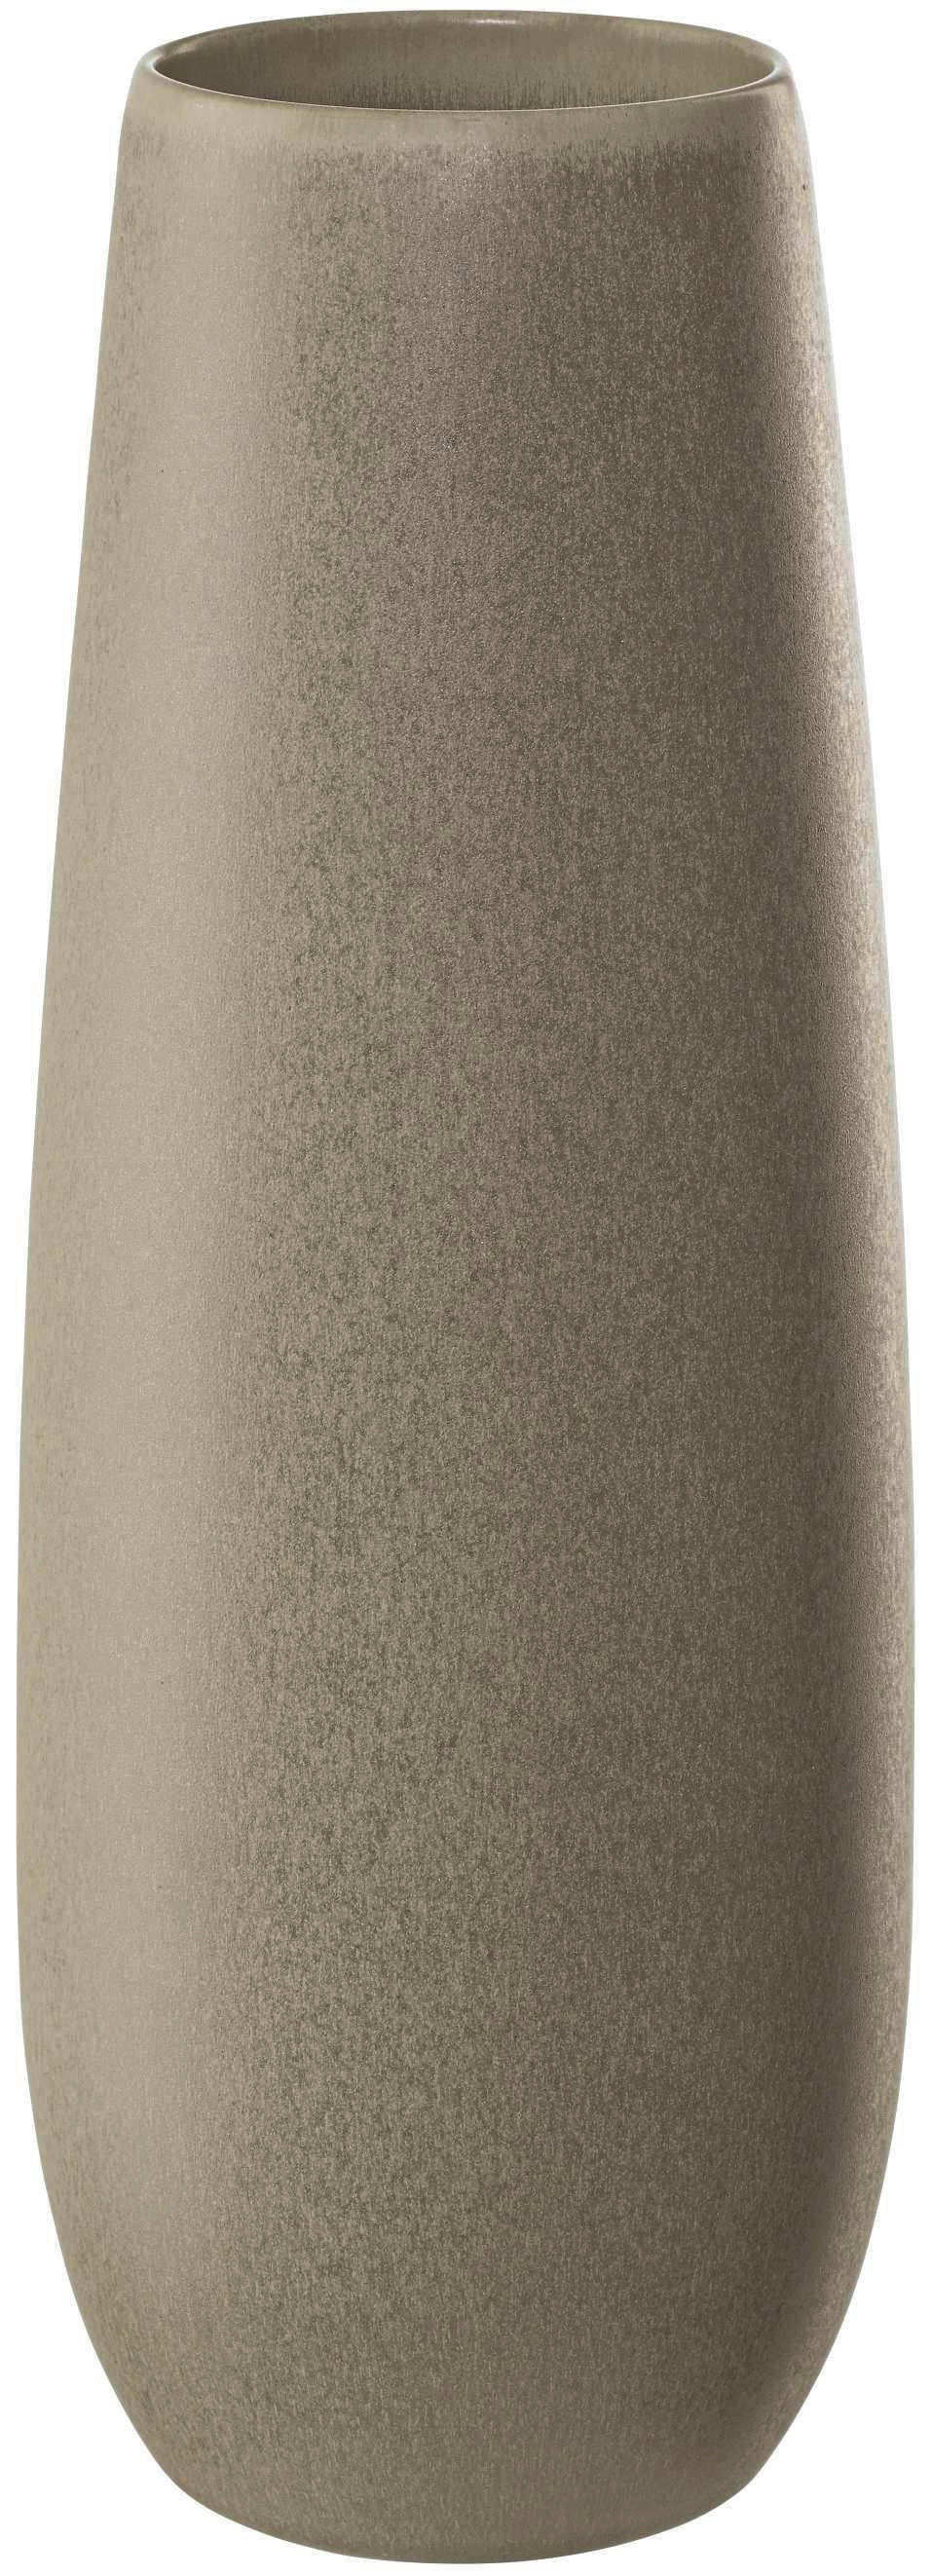 VASE  - Braun, Design, Keramik (8/32cm) - ASA